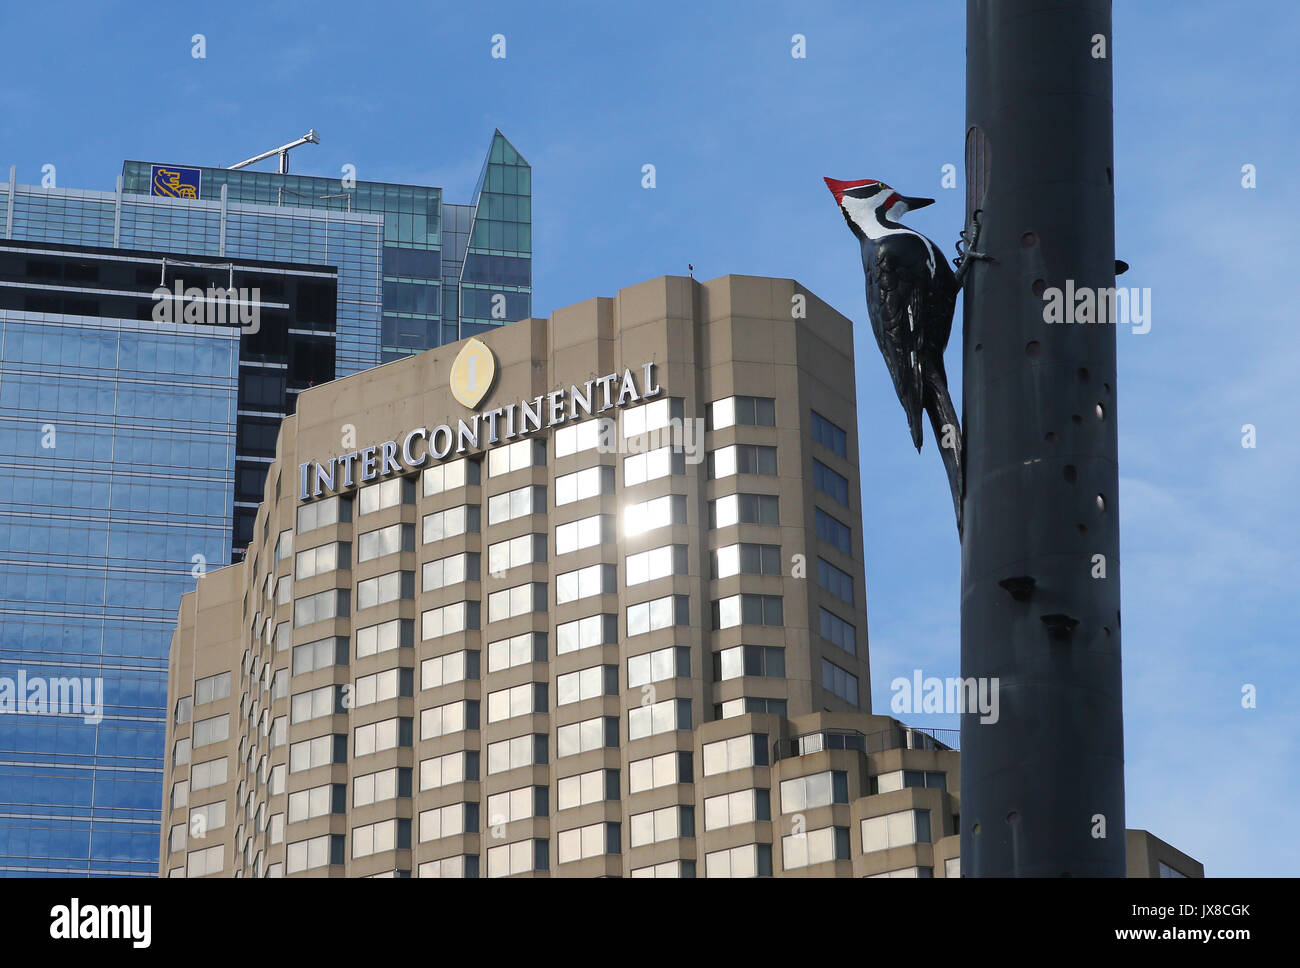 The Woodpecker Column and Intercontinental hotel in Toronto, Ontario, Canada Stock Photo